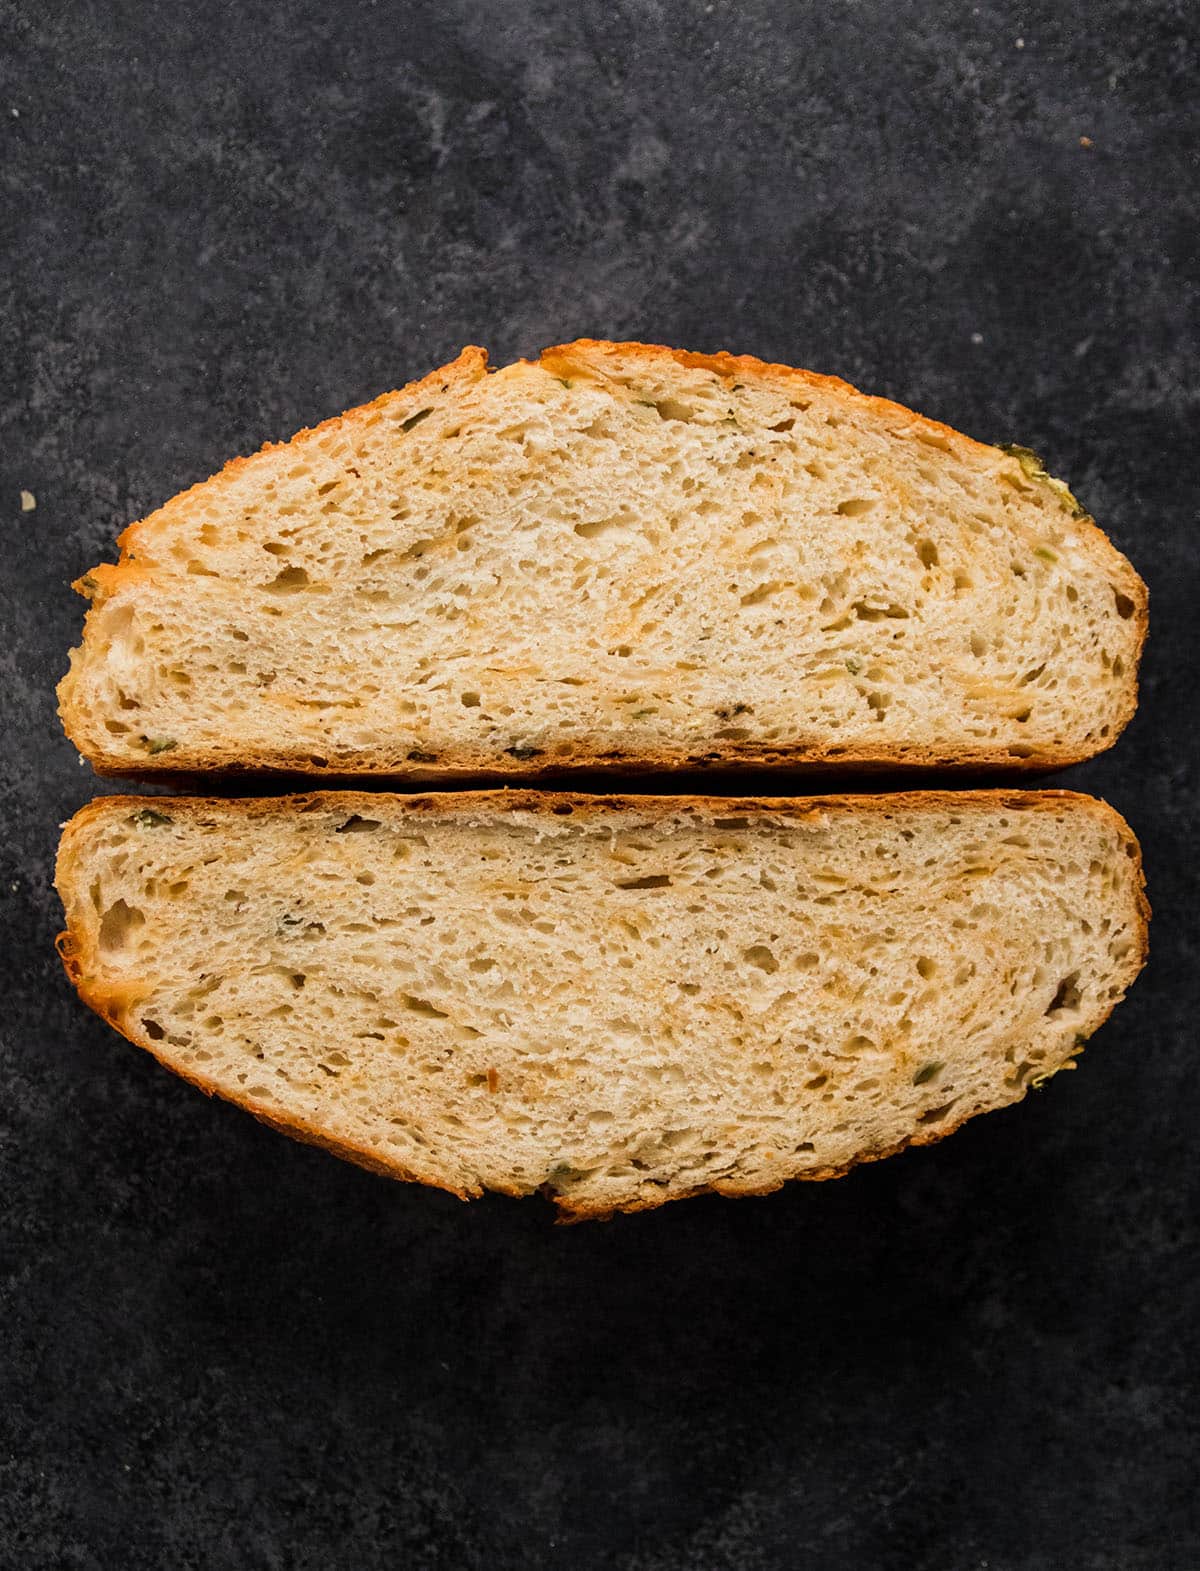 Bread cut in half to reveal interior crumb.